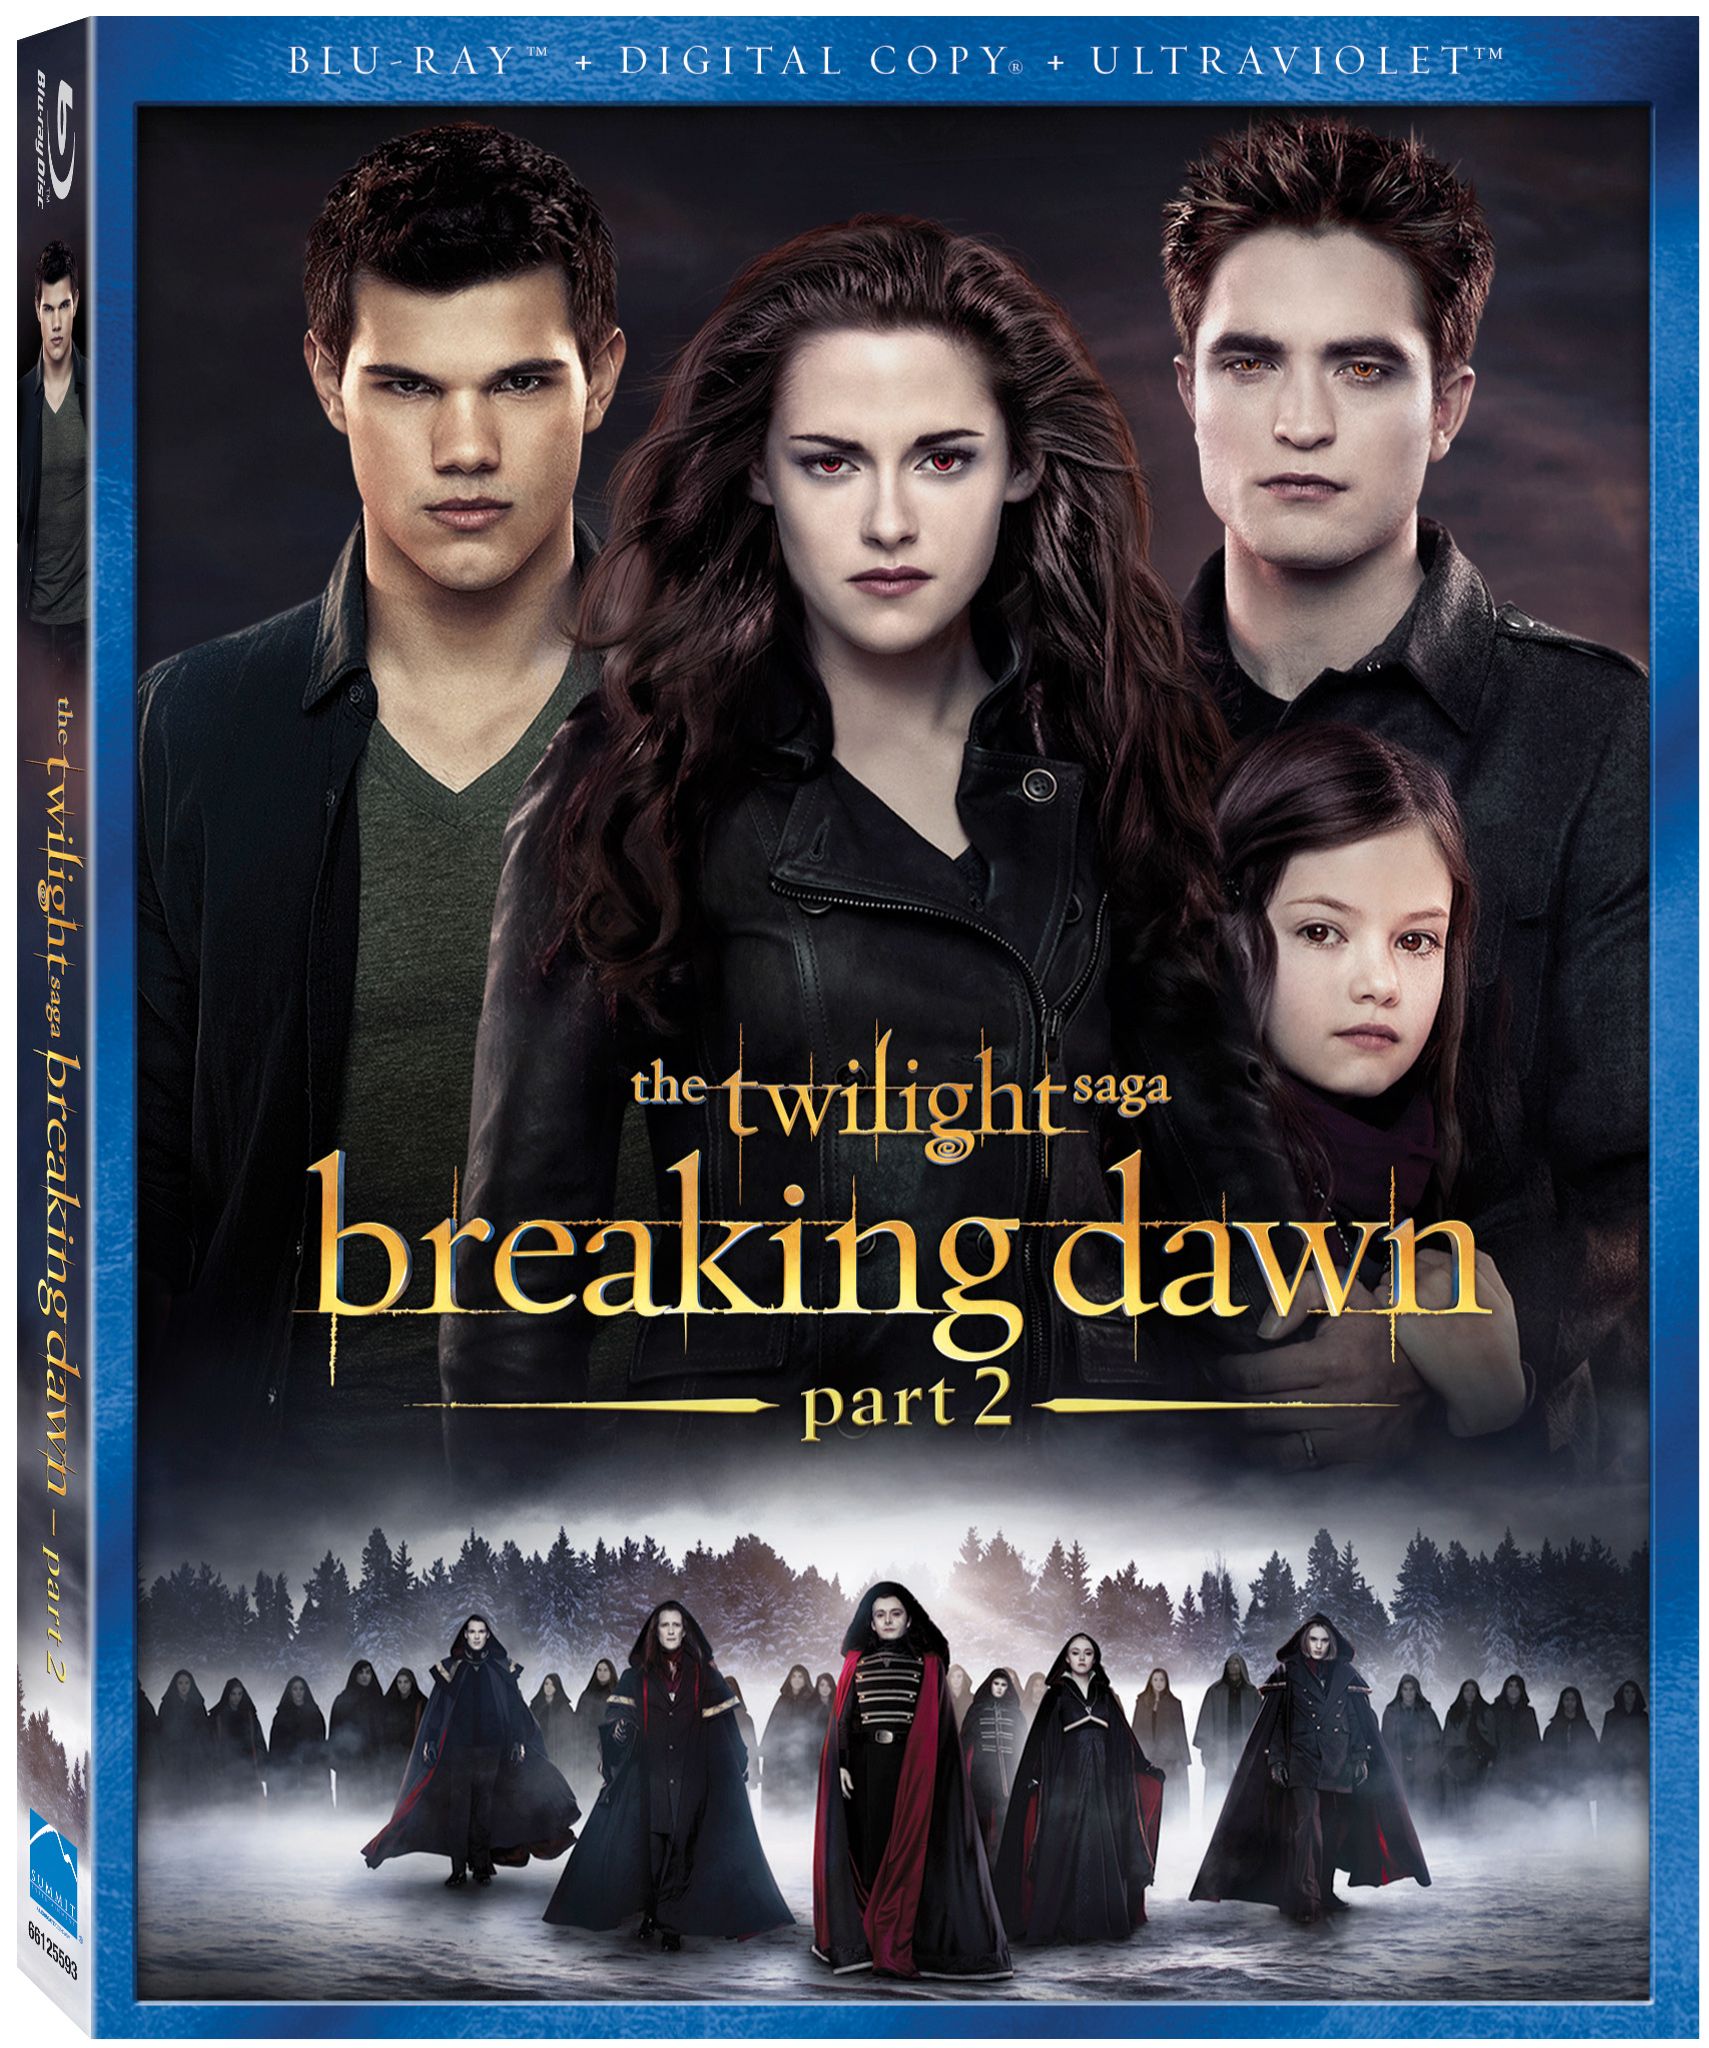 Twilight 1 full movie download free 300mb